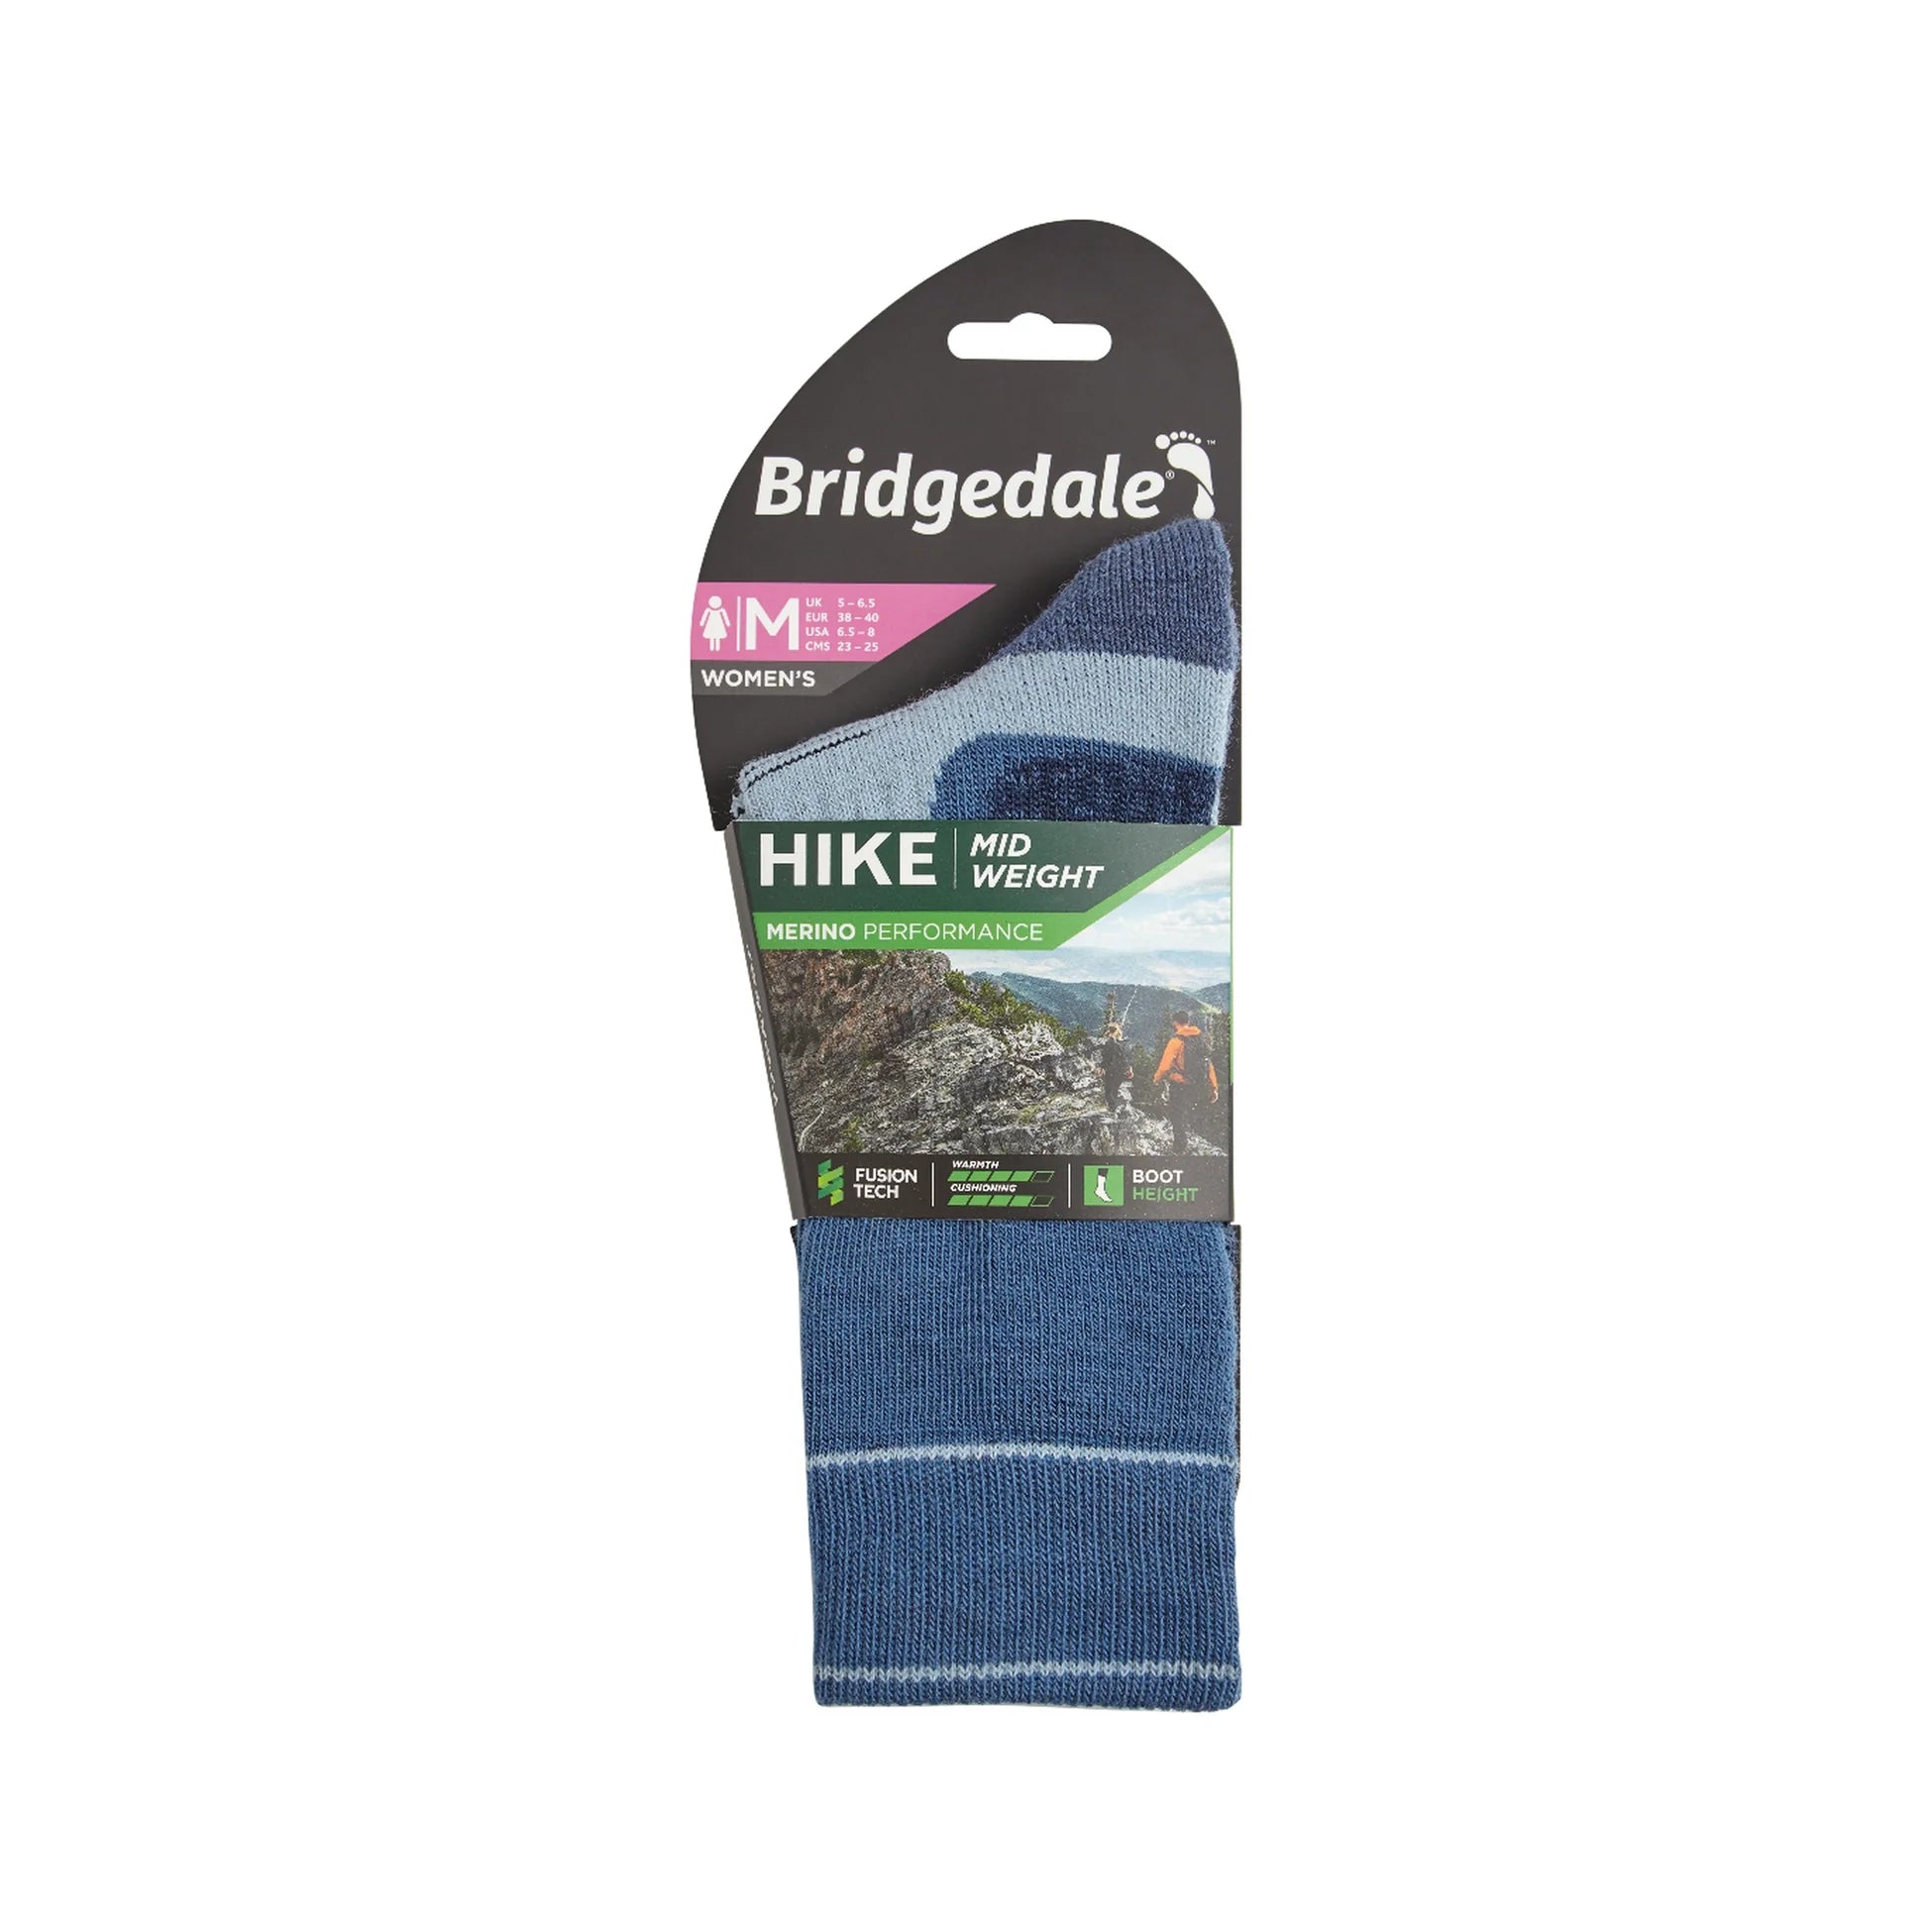 Bridgedale Hike Midweight Merino Performance Women's Sock - Blue Sky -  - Mansfield Hunting & Fishing - Products to prepare for Corona Virus